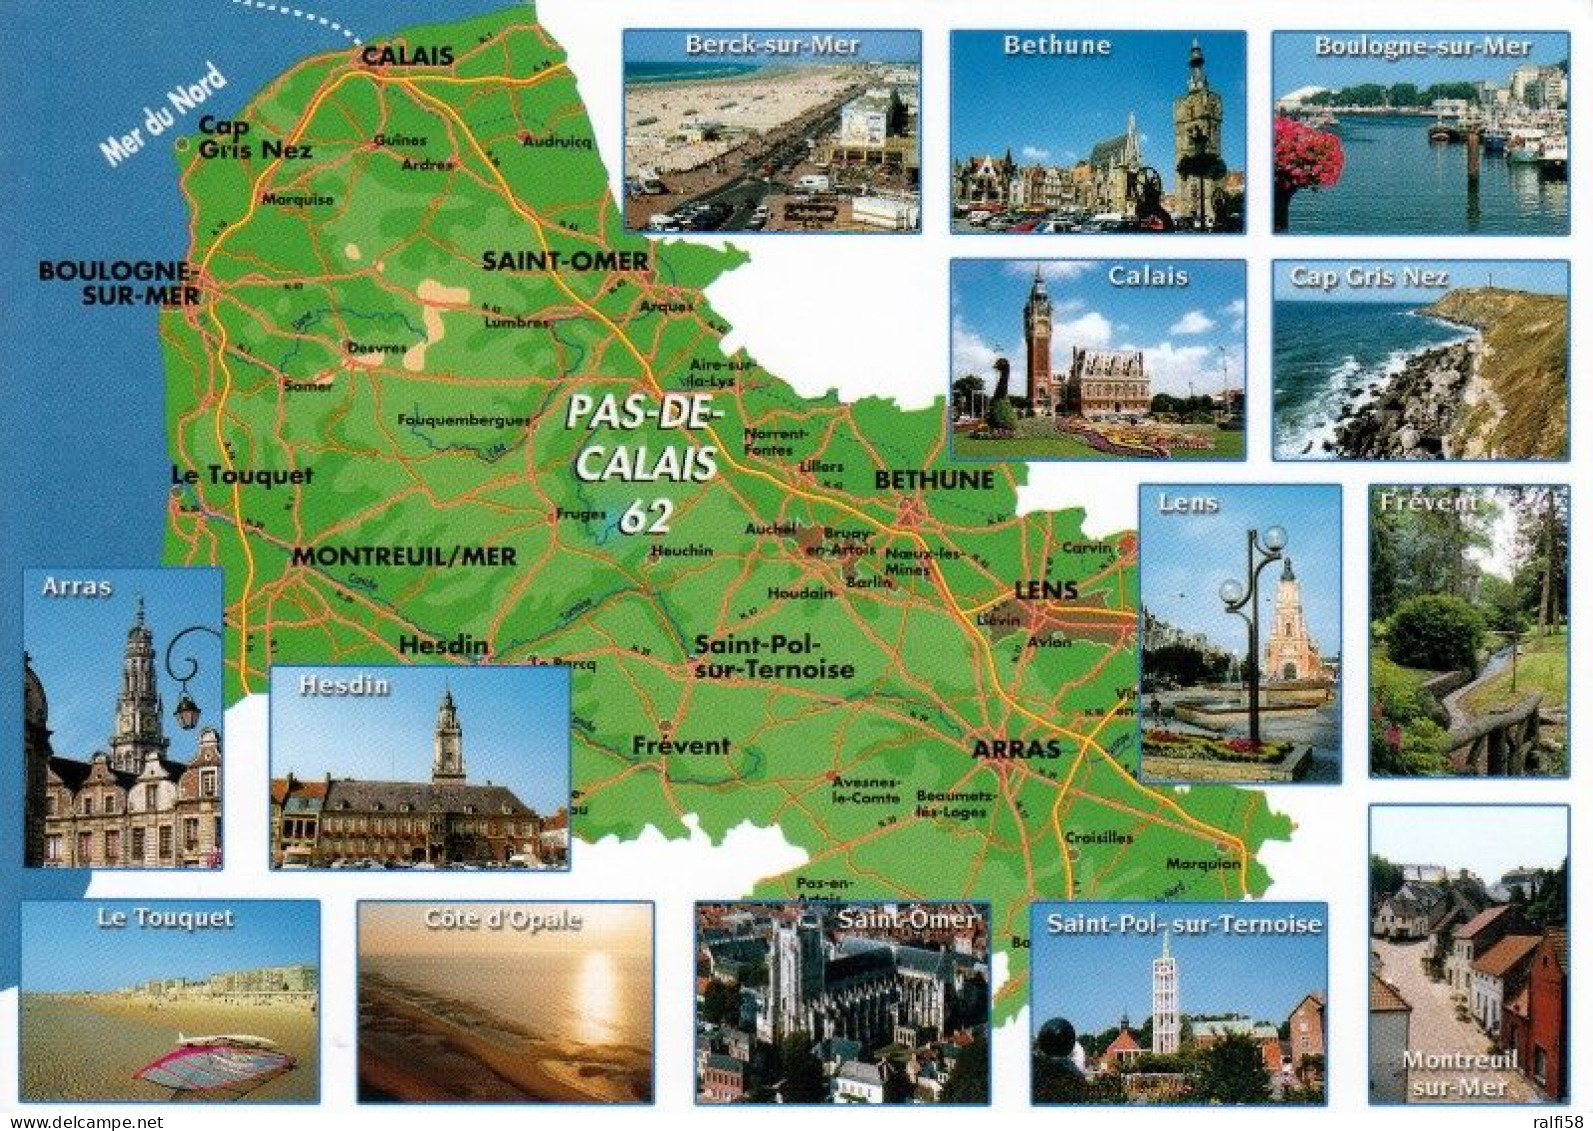 1 Map Of France * 1 Ansichtskarte Mit Der Landkarte - Département Pas-de-Calais - Ordnungsnummer 62 * - Maps